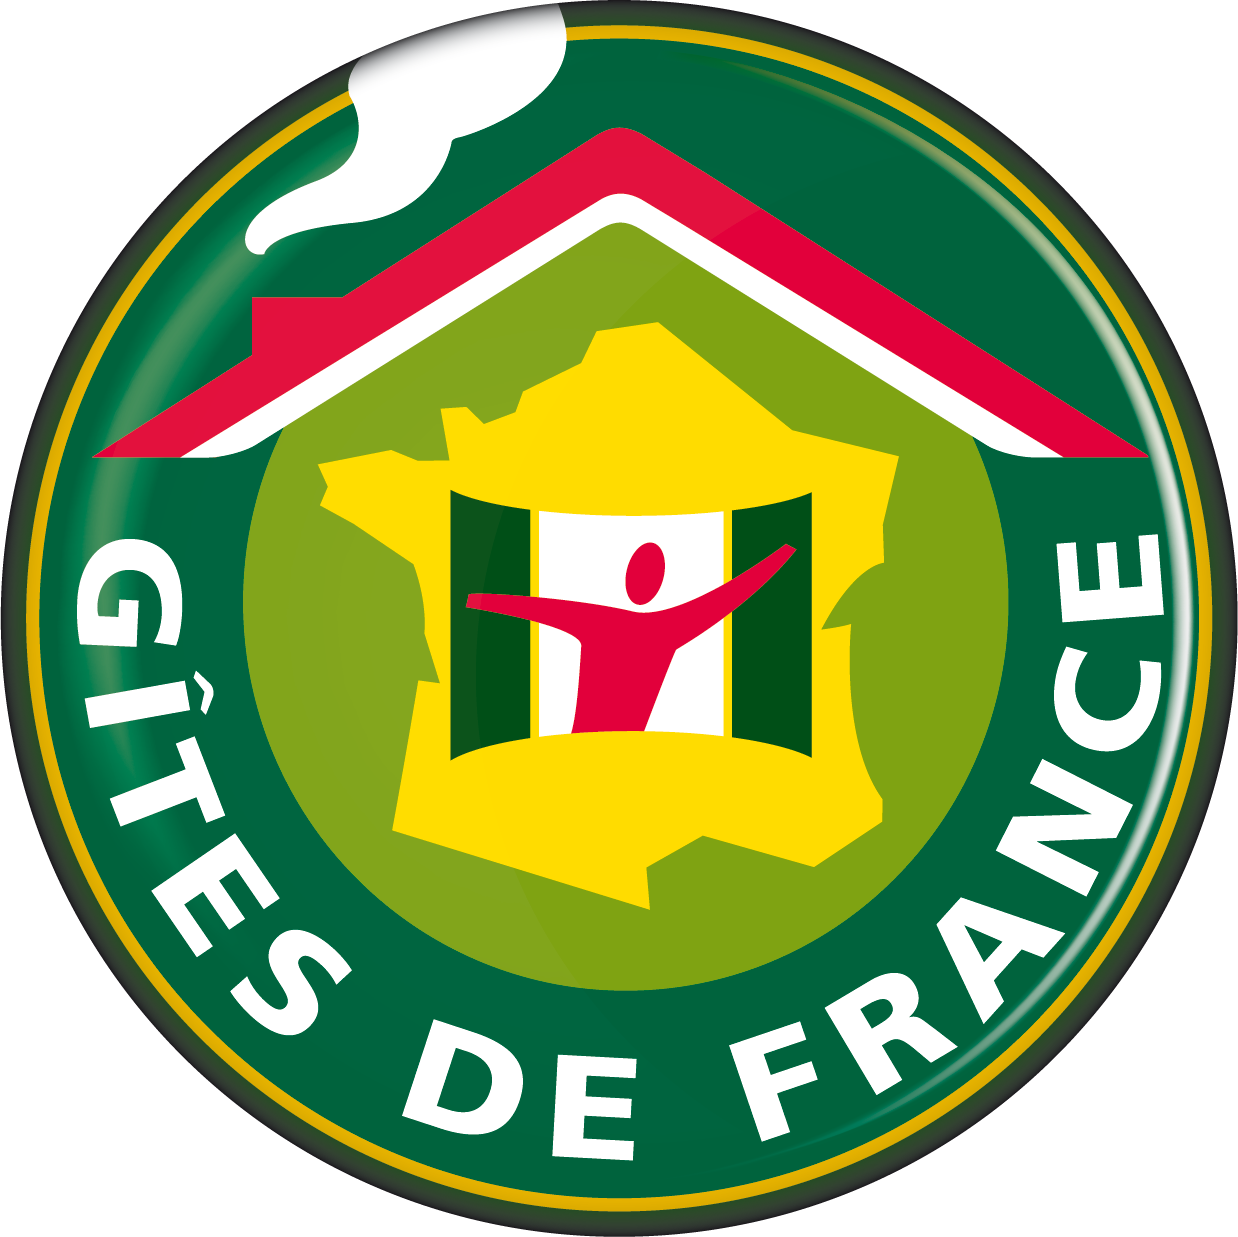 National Congress of Gîtes de France